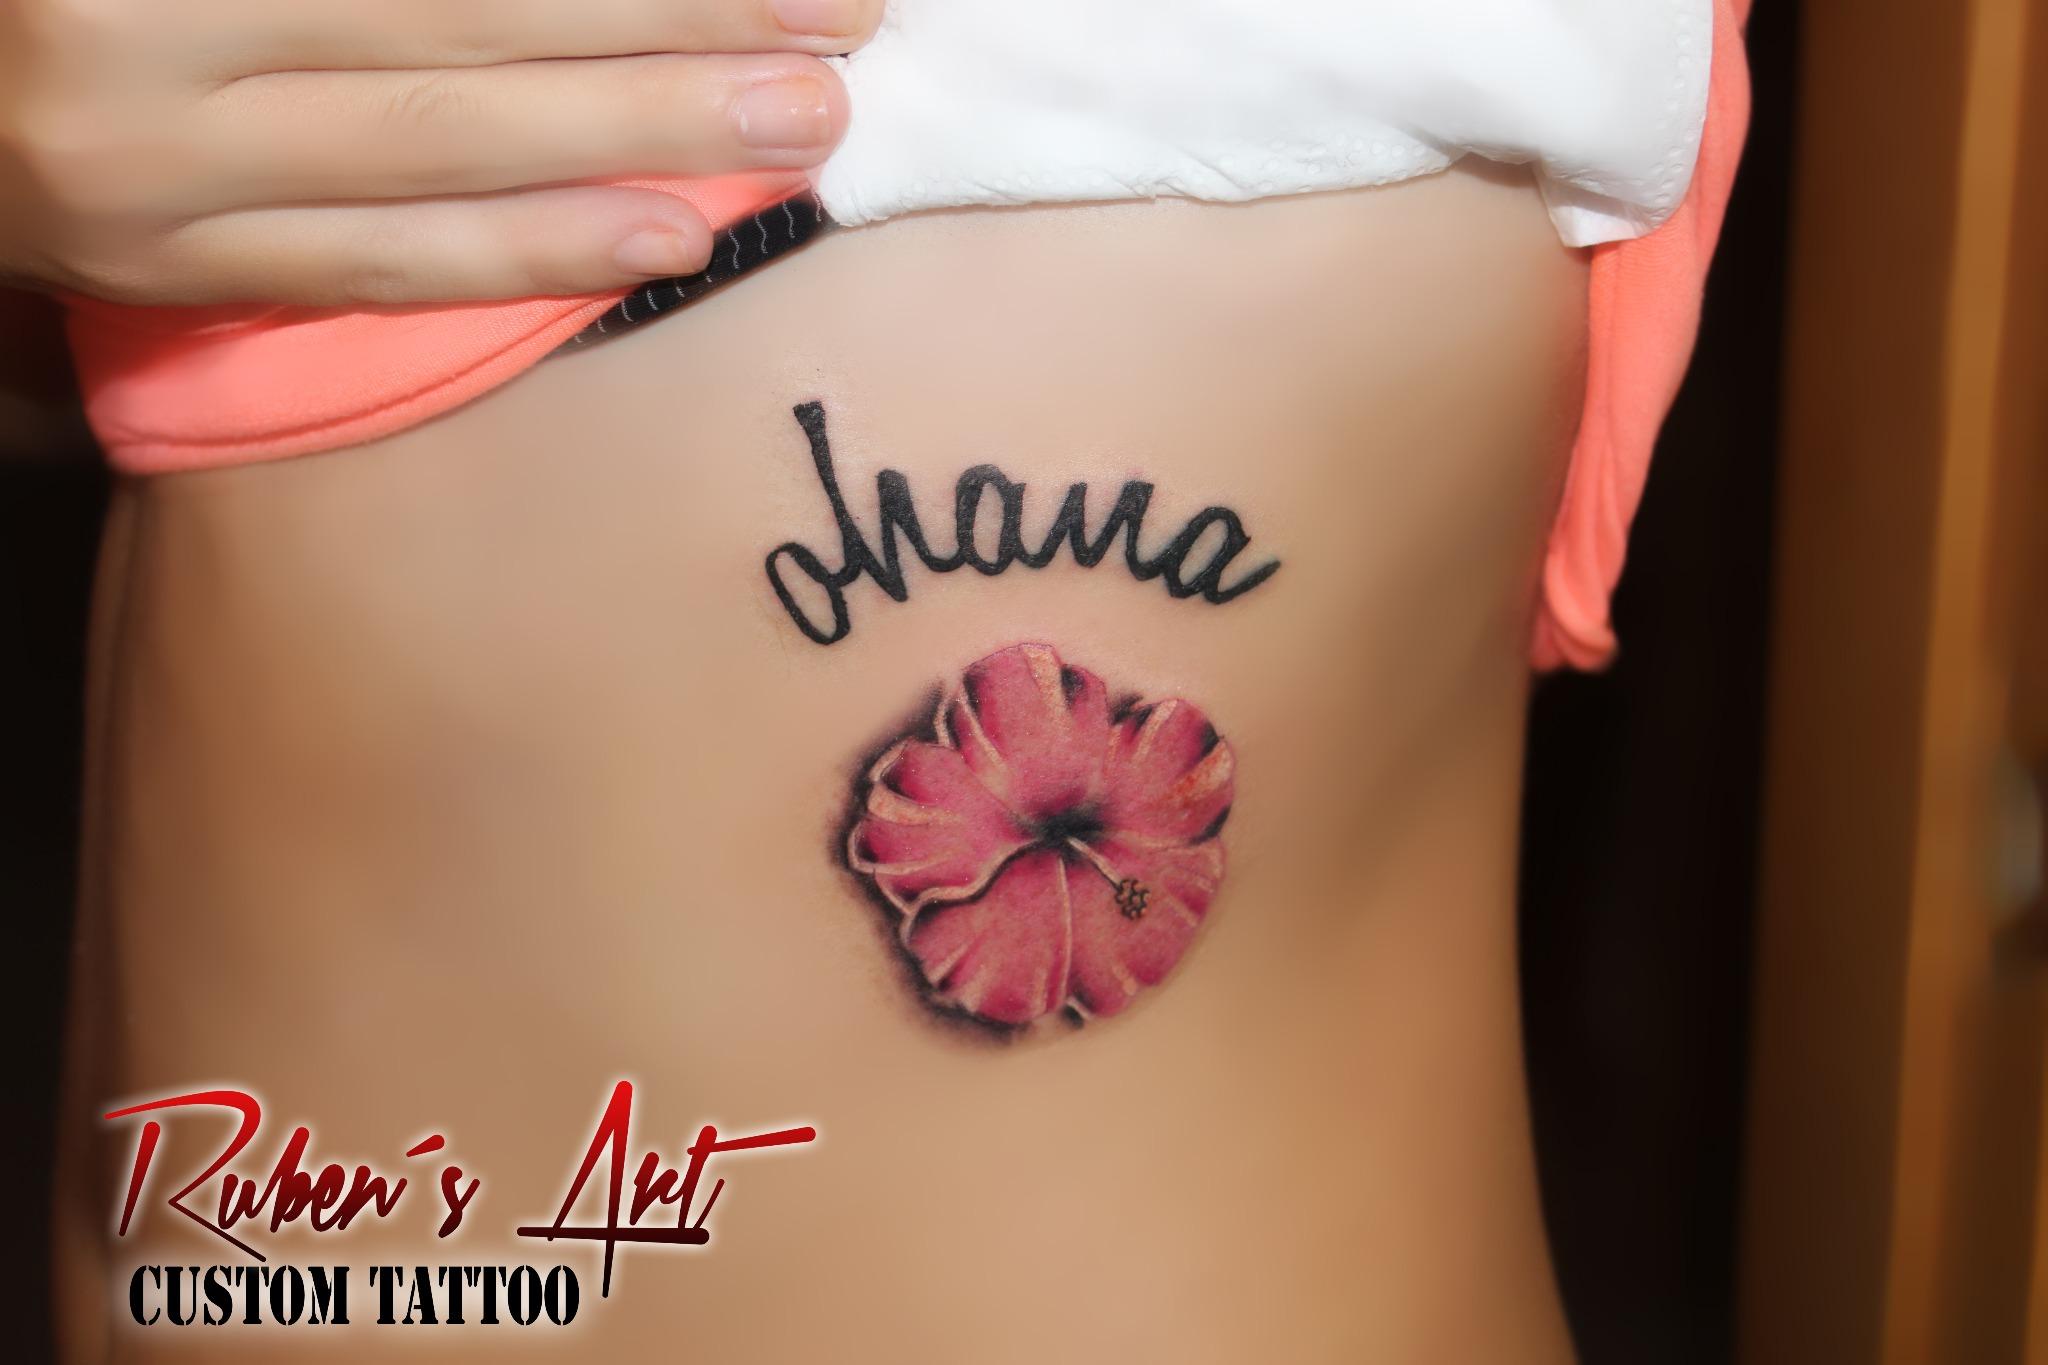 Ohana with lotus  wrist tattoo by prowlingkitten on DeviantArt